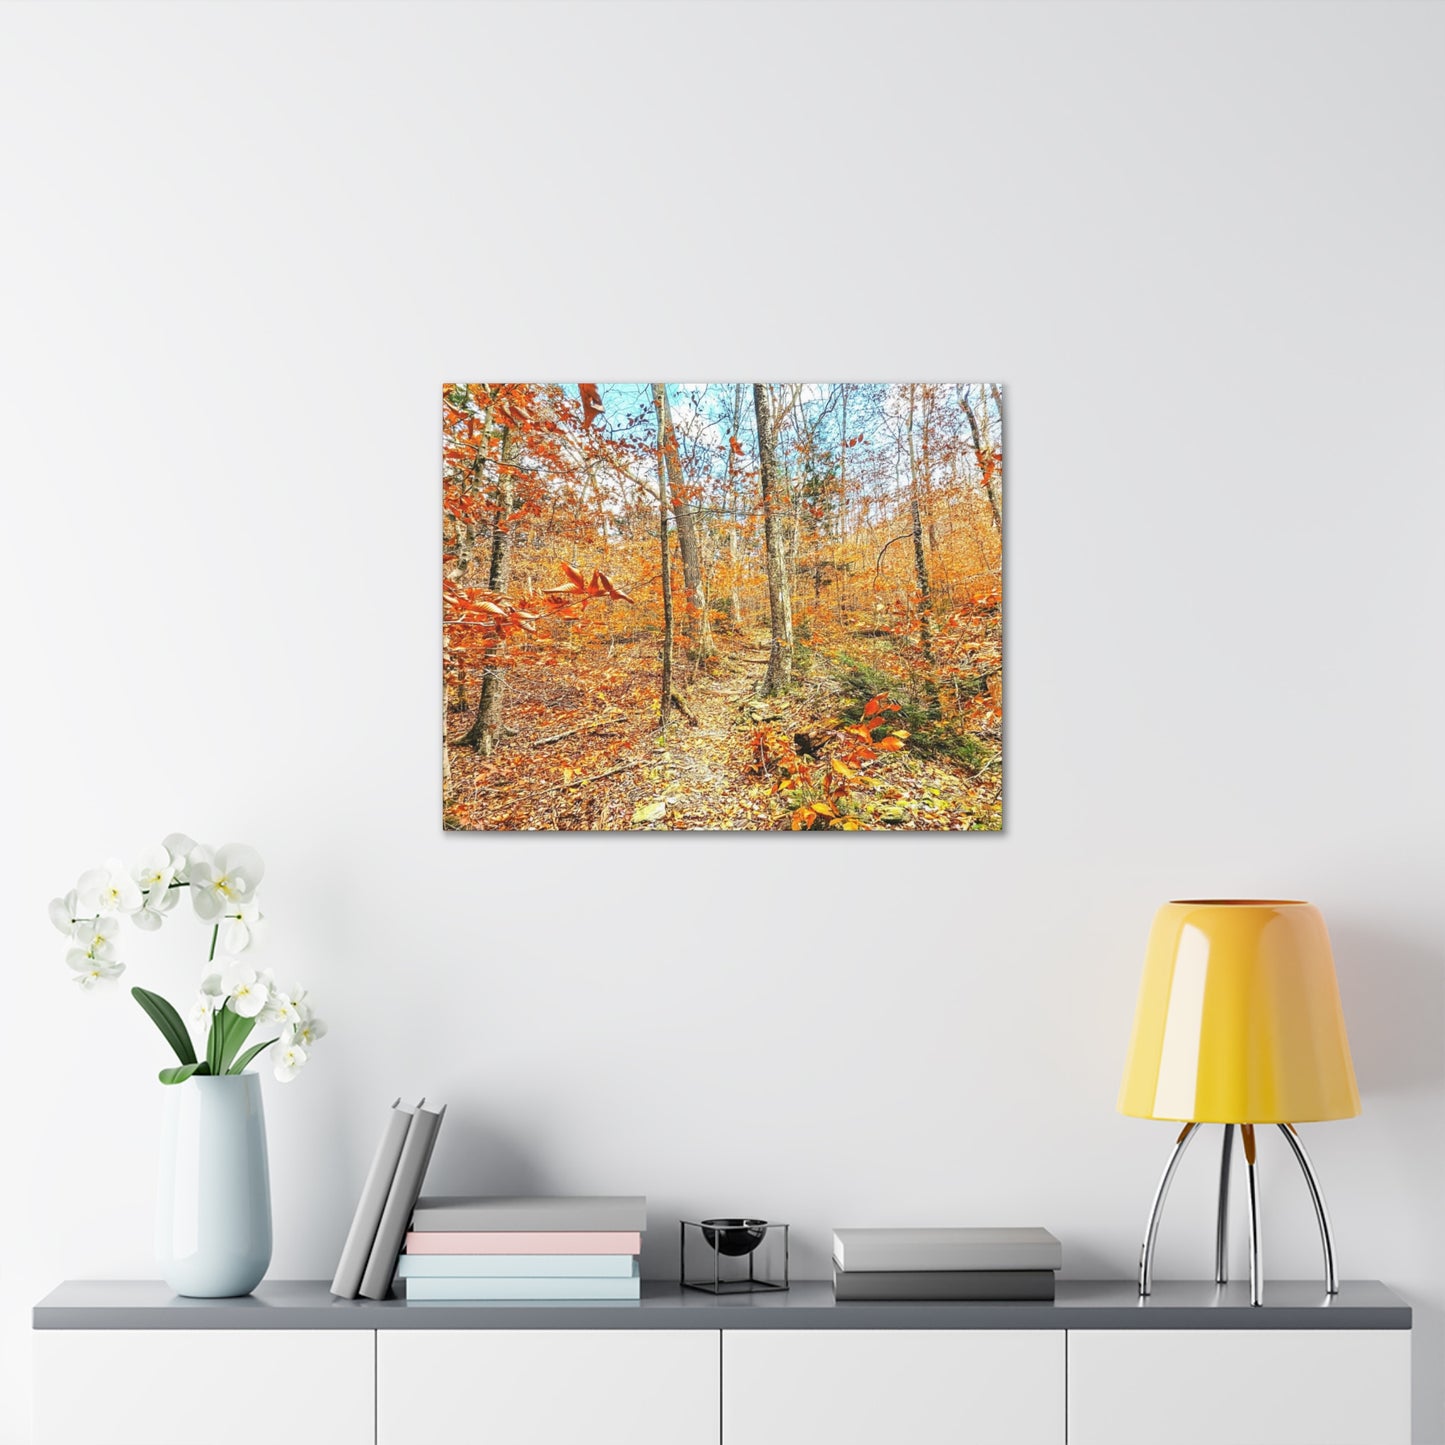 Appalachian Trail Fall Canvas Art Print